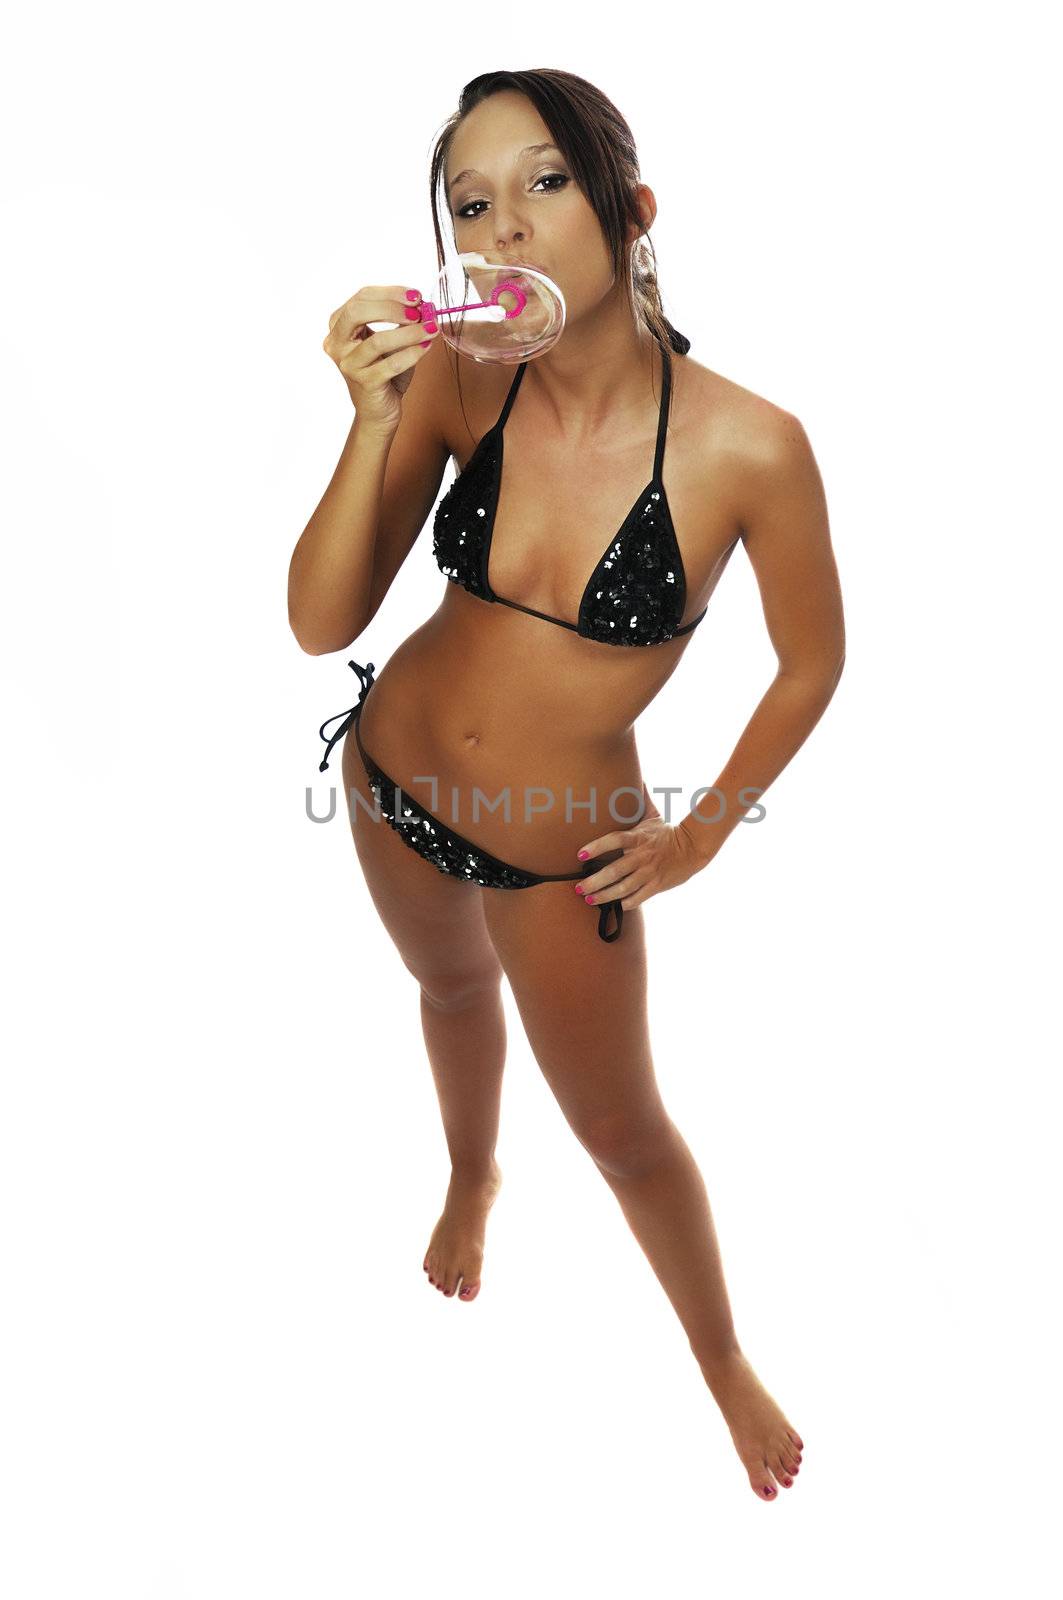 Bikini Girl by PDImages